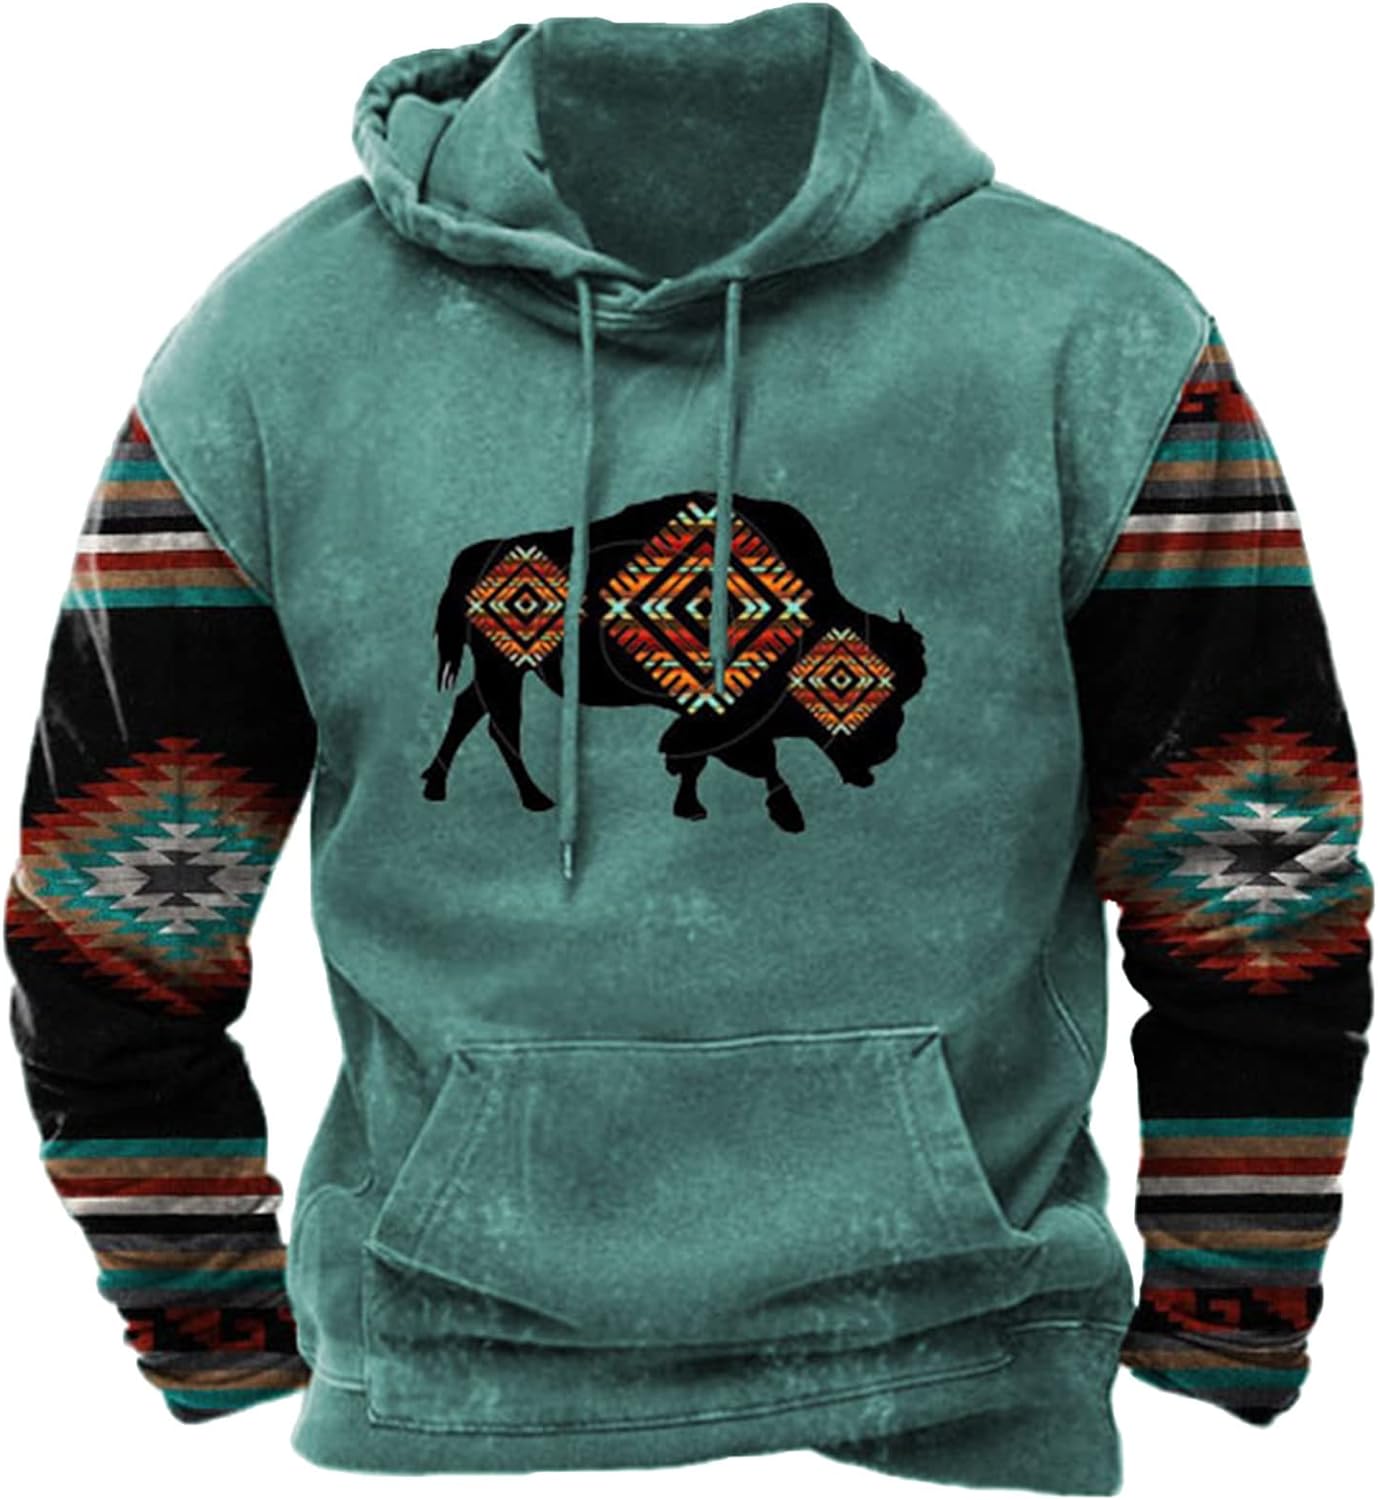 Mens Hoodies Pullover Western Aztec Ethnic Hooded Sweatshrits Lightweight Casual Ethnic Cow Print Graphic Hoodie